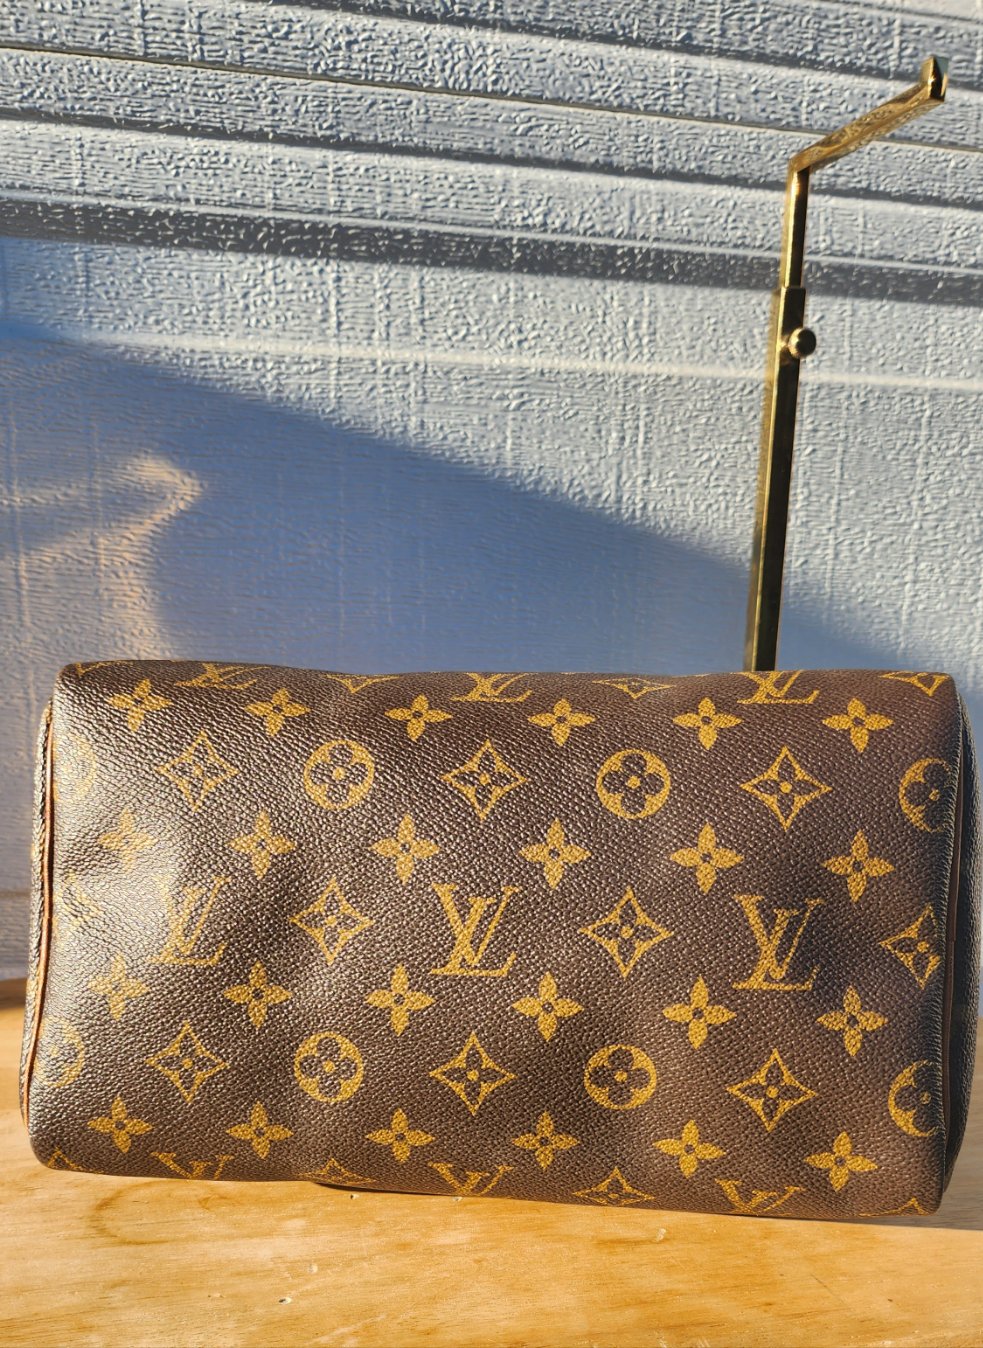 Louis Vuitton Speedy 25, Speedy 25 Handbag